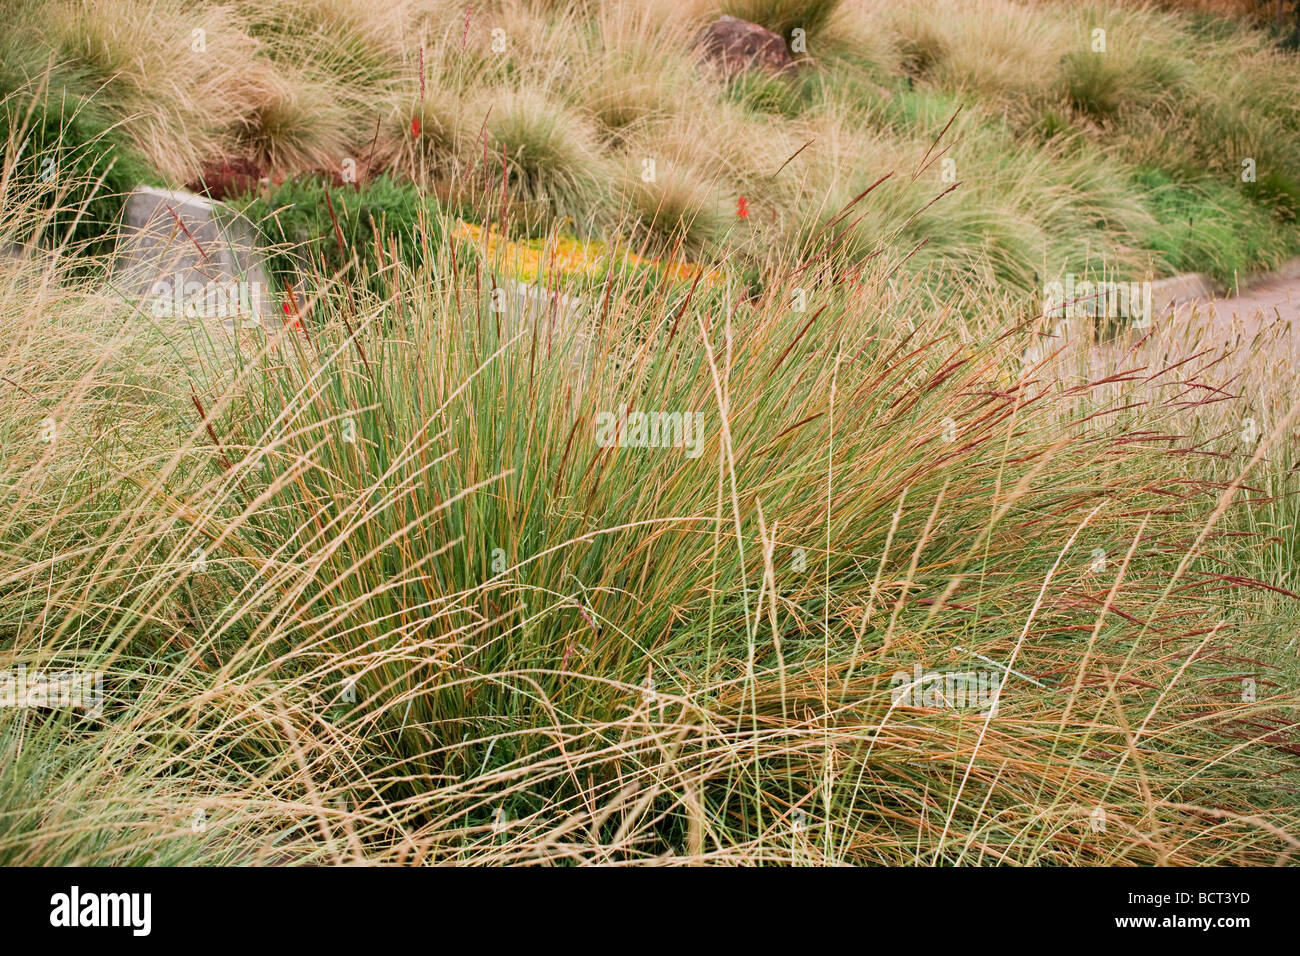 Spartina bakeri sand cordgrass in ornamental grass meadow green roof garden for California home Stock Photo